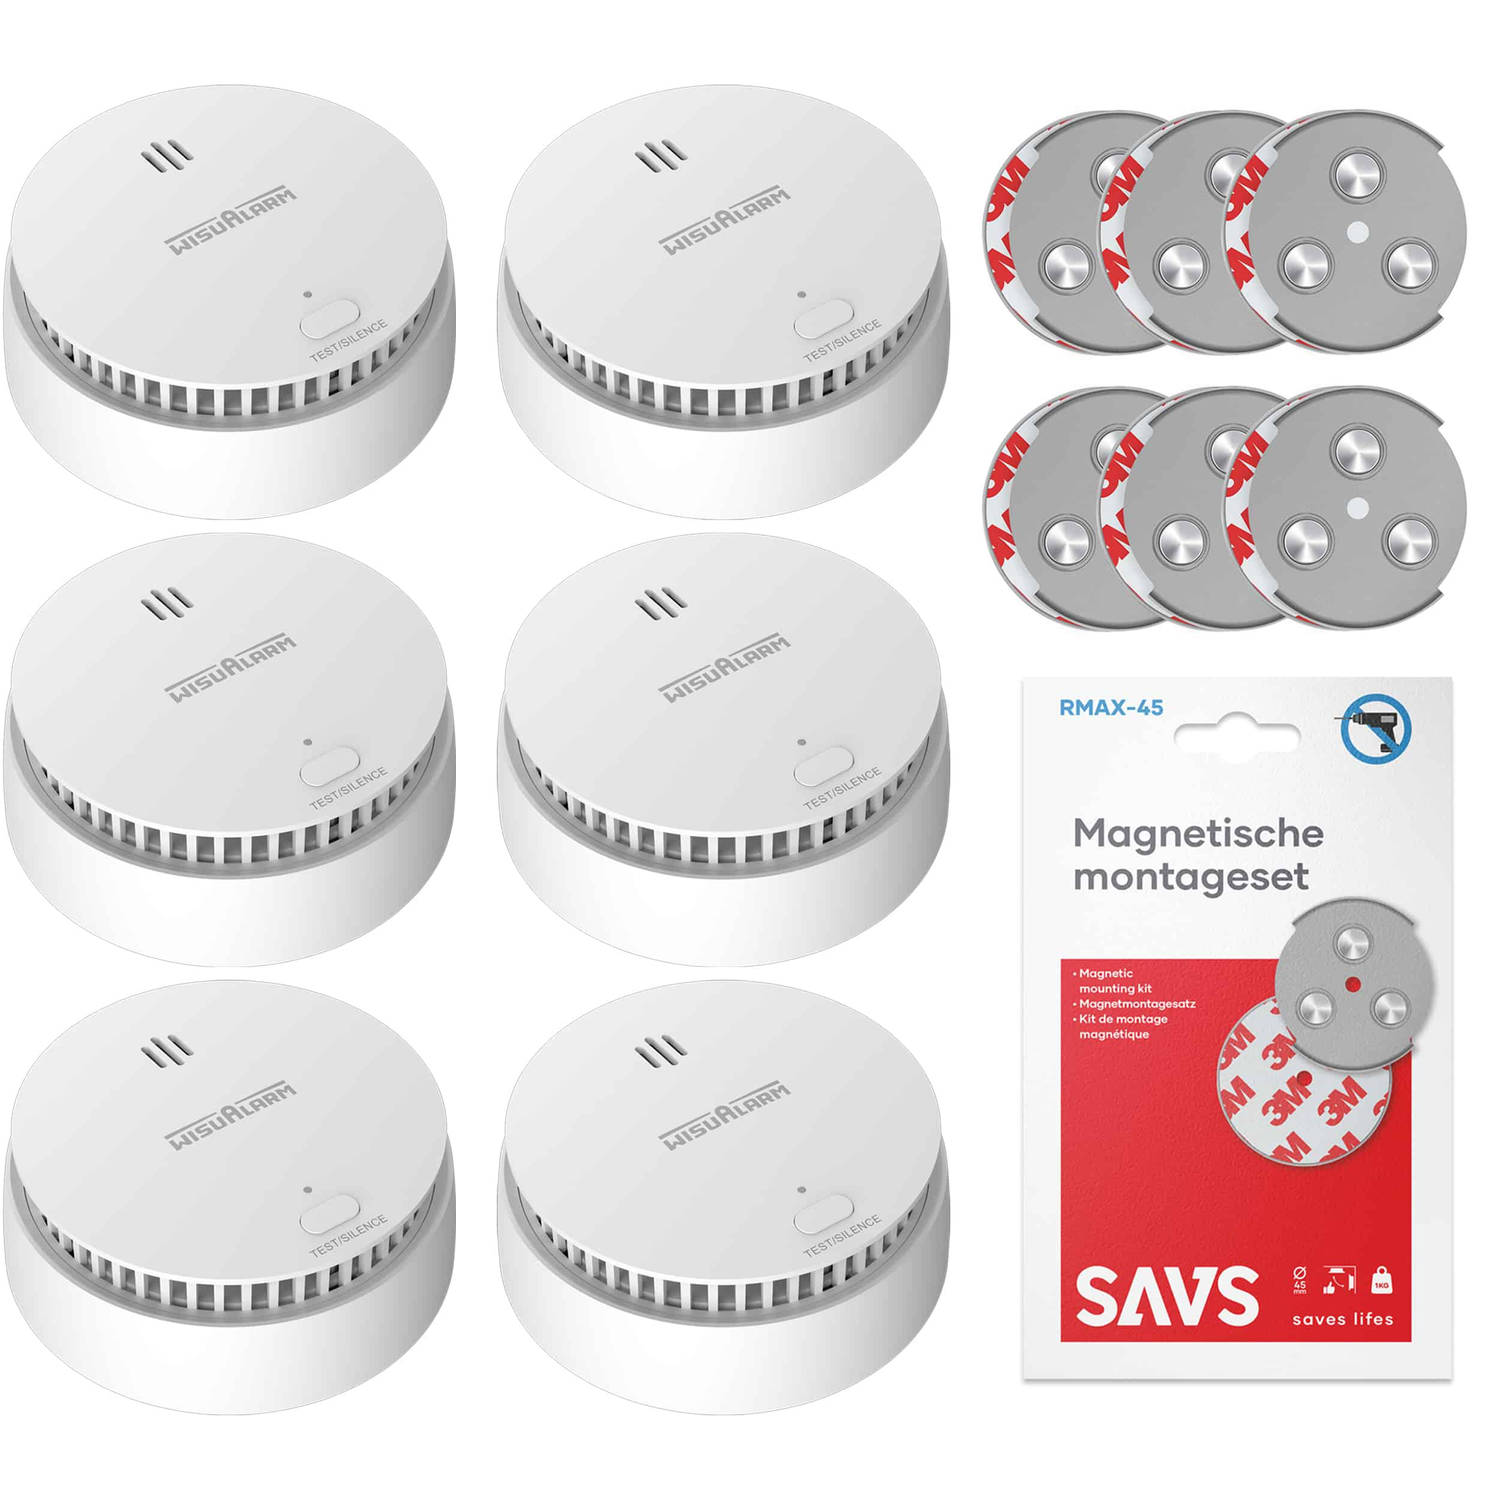 WisuAlarm SA20A Rookmelder 6-pack + SAVS® Montageset 10 jaar batterij Ook voor keuken en badkamer (d